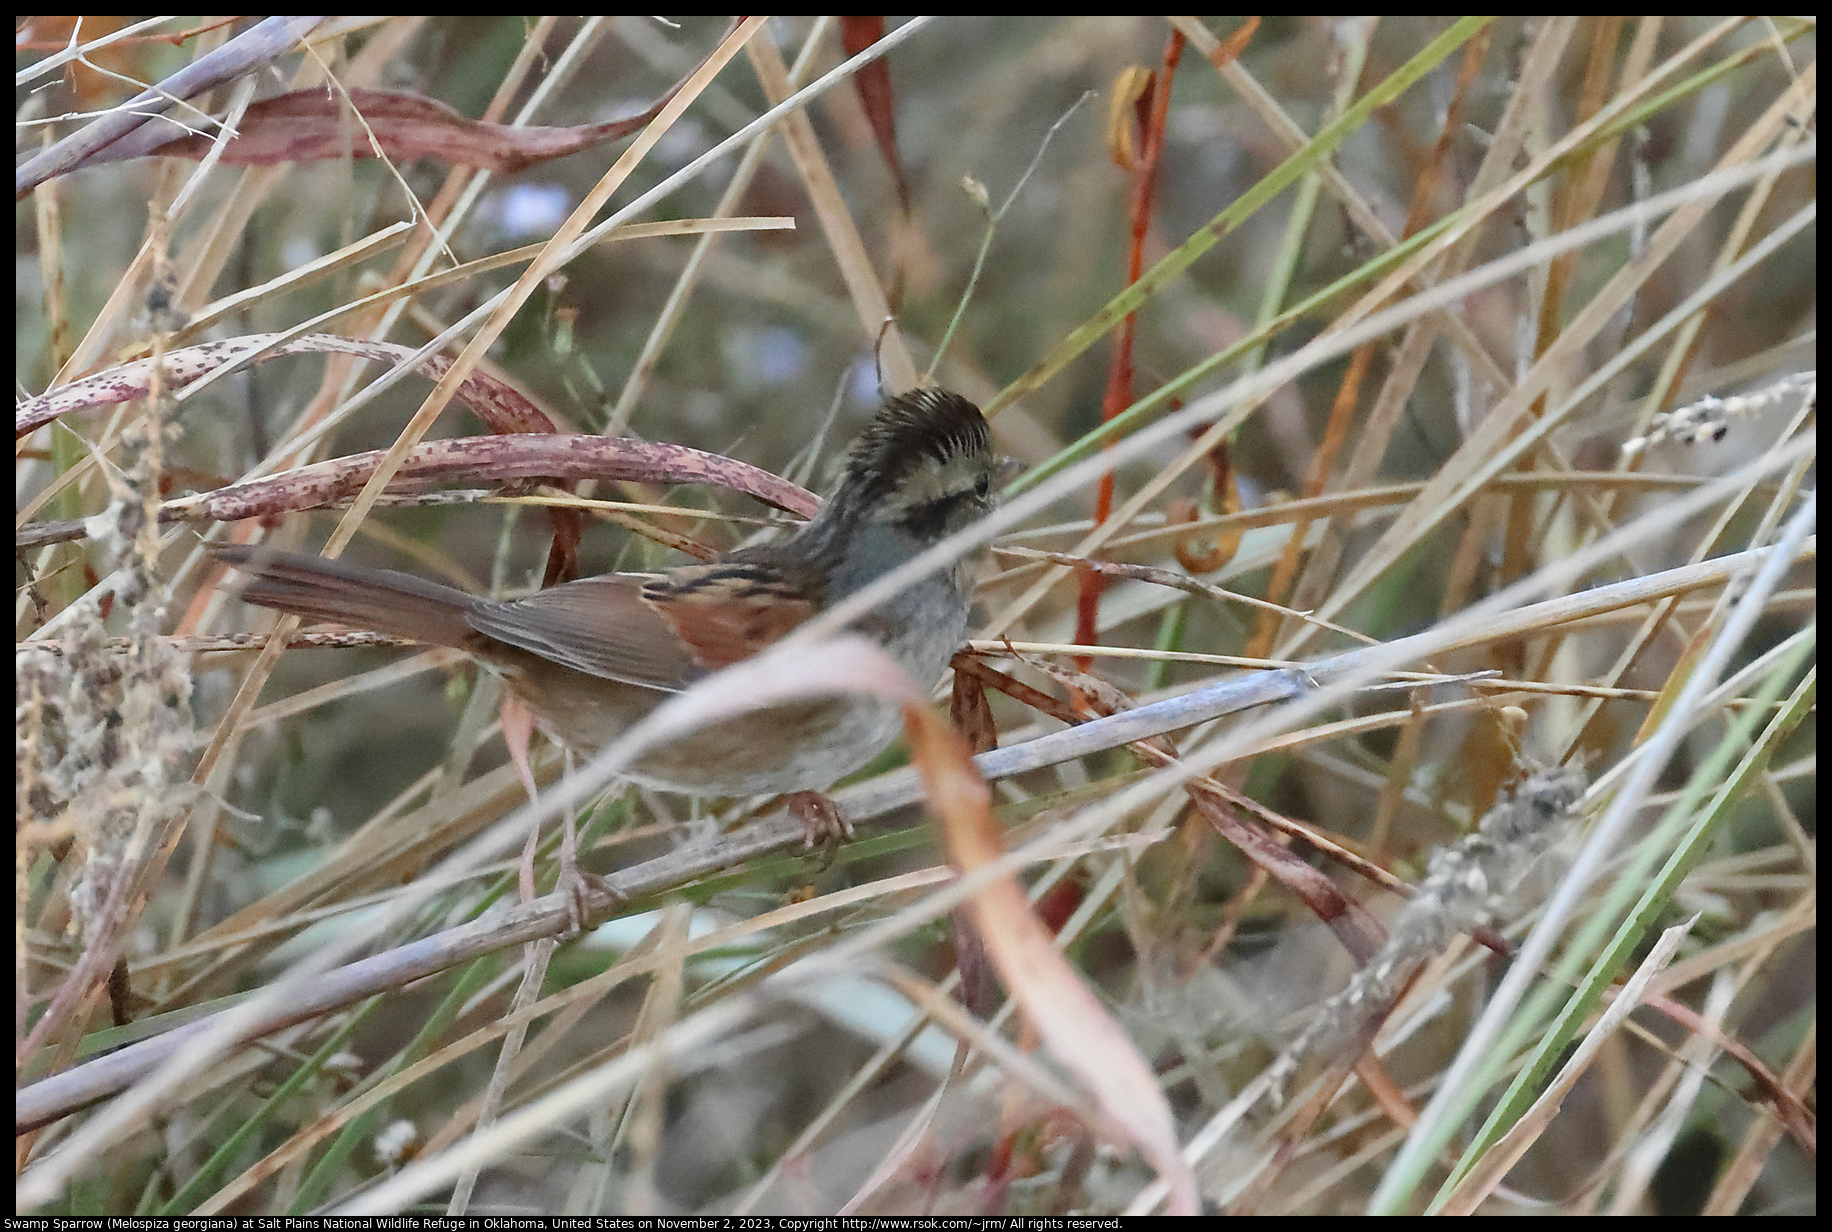 Swamp Sparrow (Melospiza georgiana) at Salt Plains National Wildlife Refuge in Oklahoma, United States on November 2, 2023